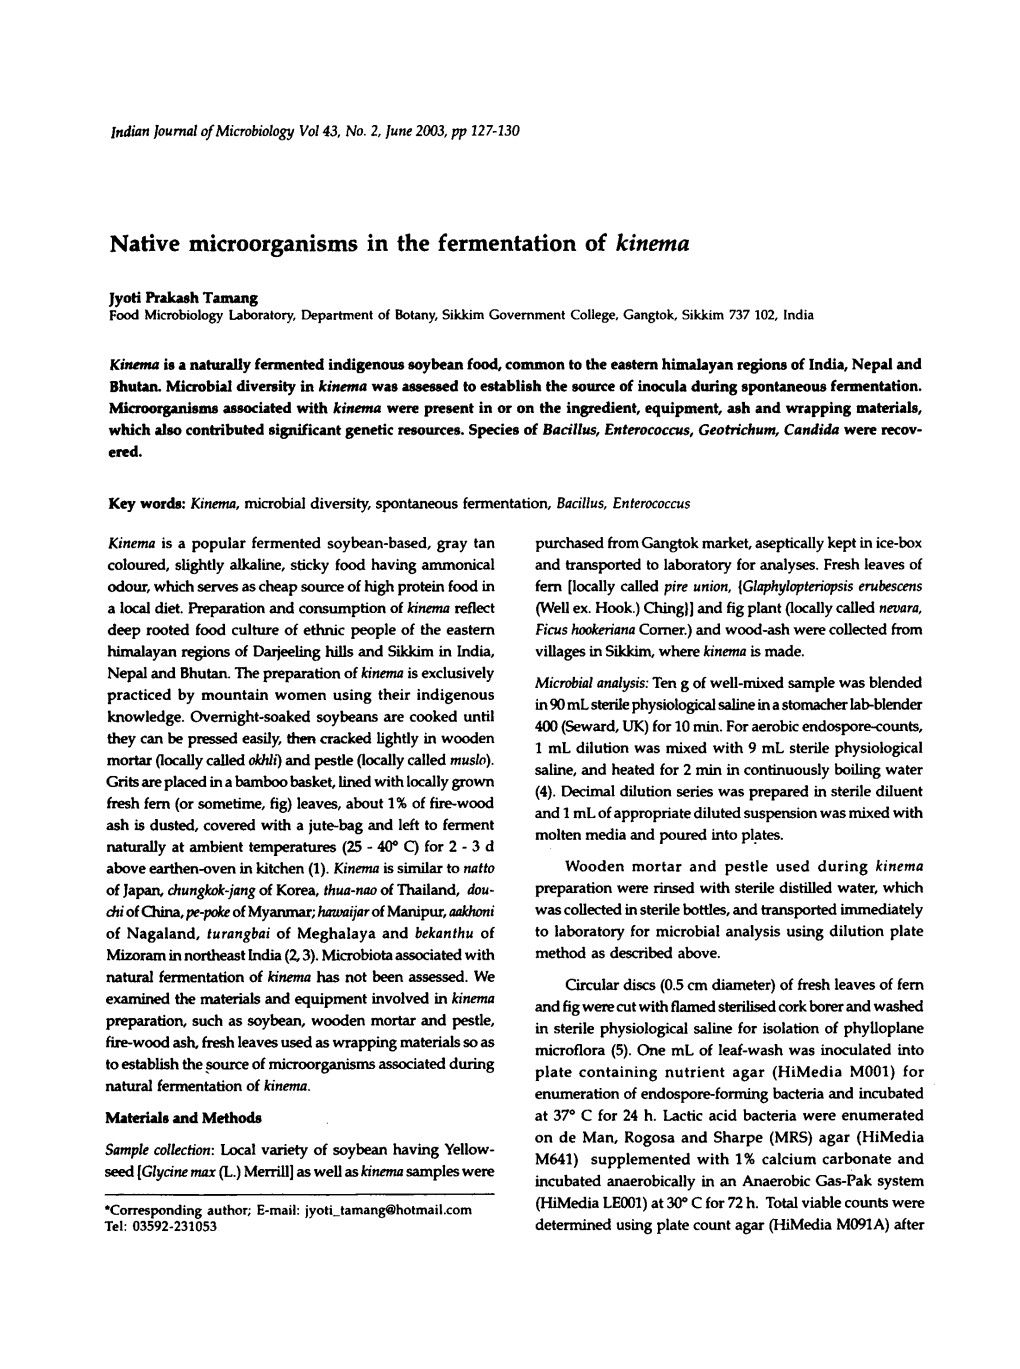 Native Microorganisms in the Fermentation of Kinema